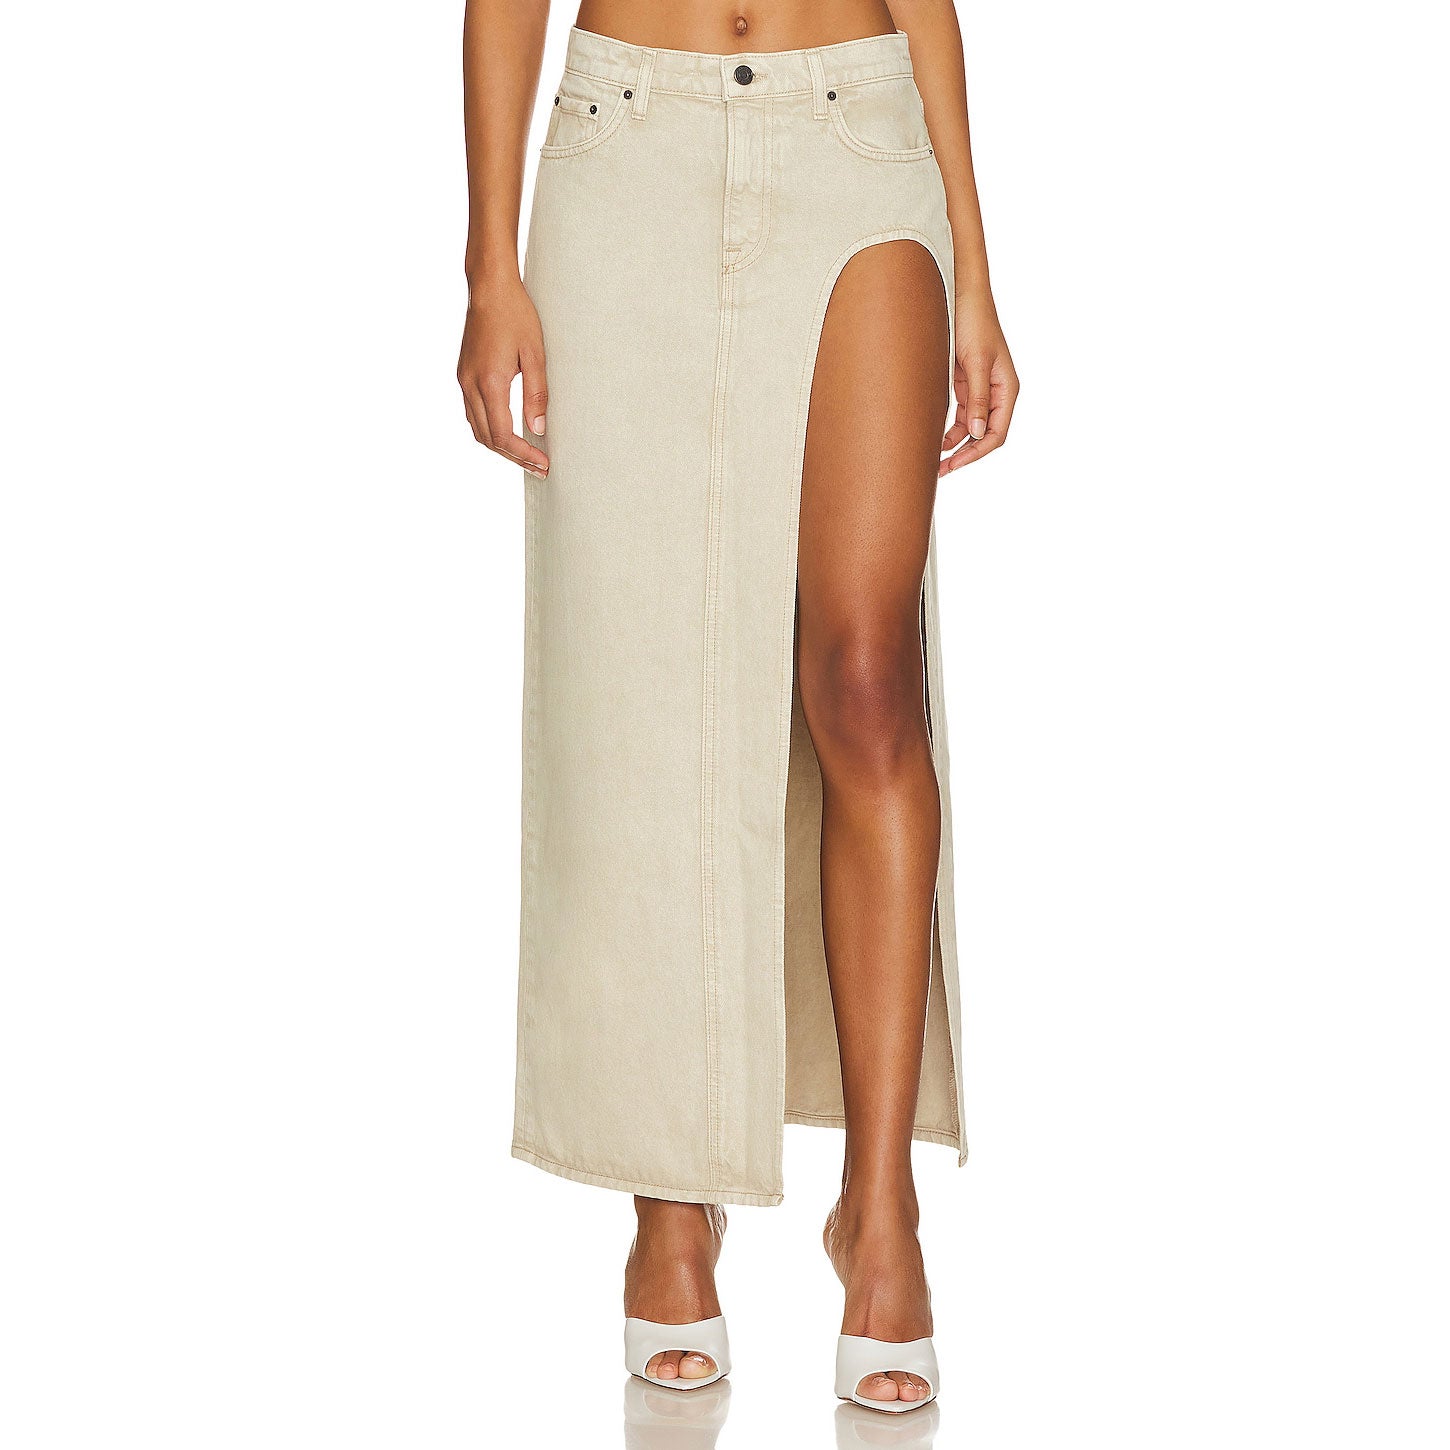 Summer Split Out Denim Skirt Jeans Women Casual Long Skirt Low Waisted Jean Streetwear New Midi Pencil Skirt Y2k New